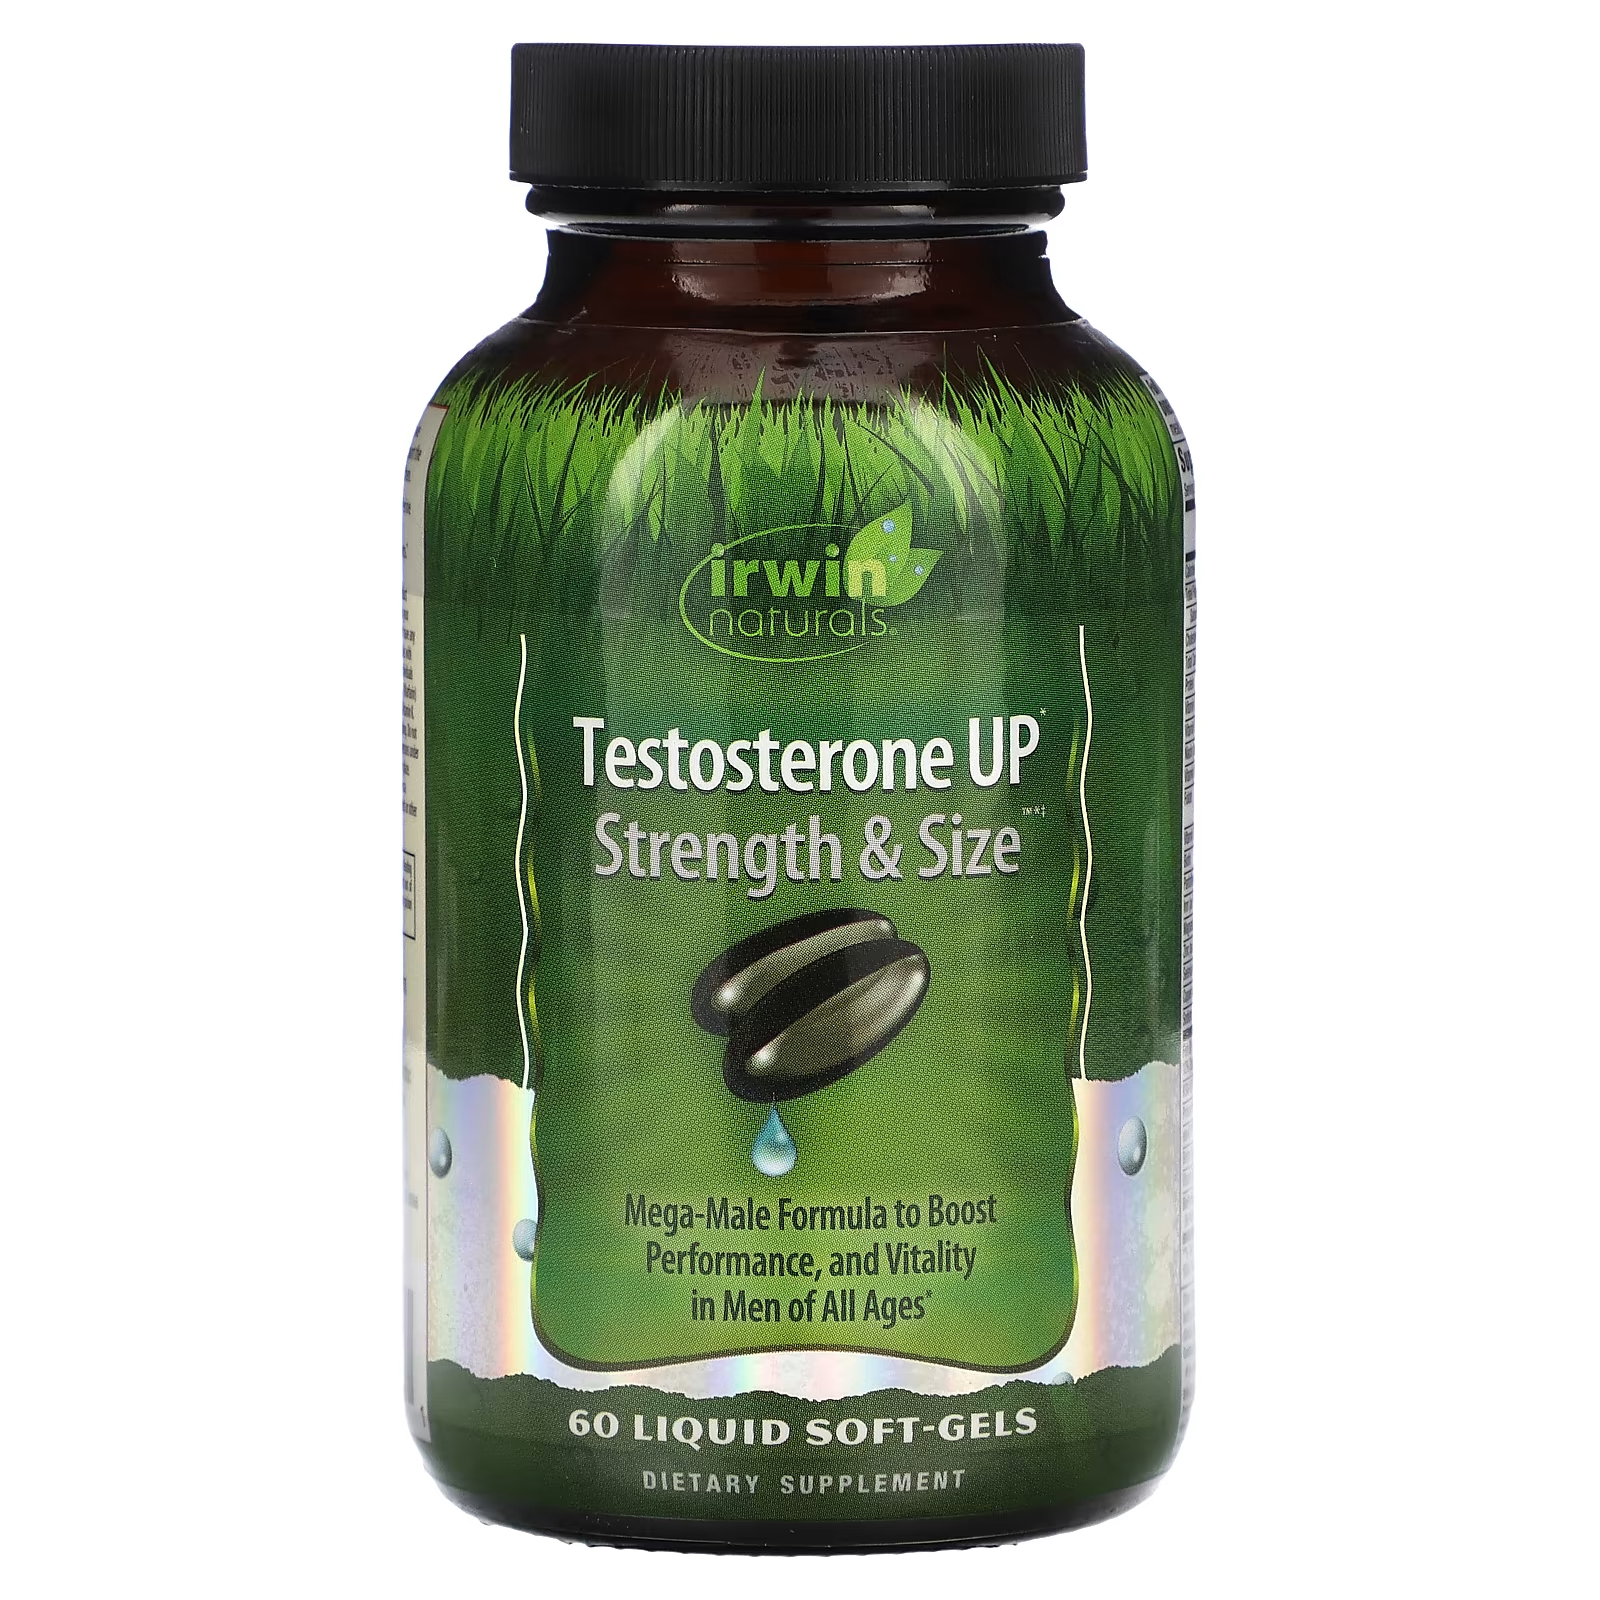 Пищевая добавка Irwin Naturals Testosterone Up Strength & Size, 60 жидких таблеток пищевая добавка irwin naturals testosterone up strength